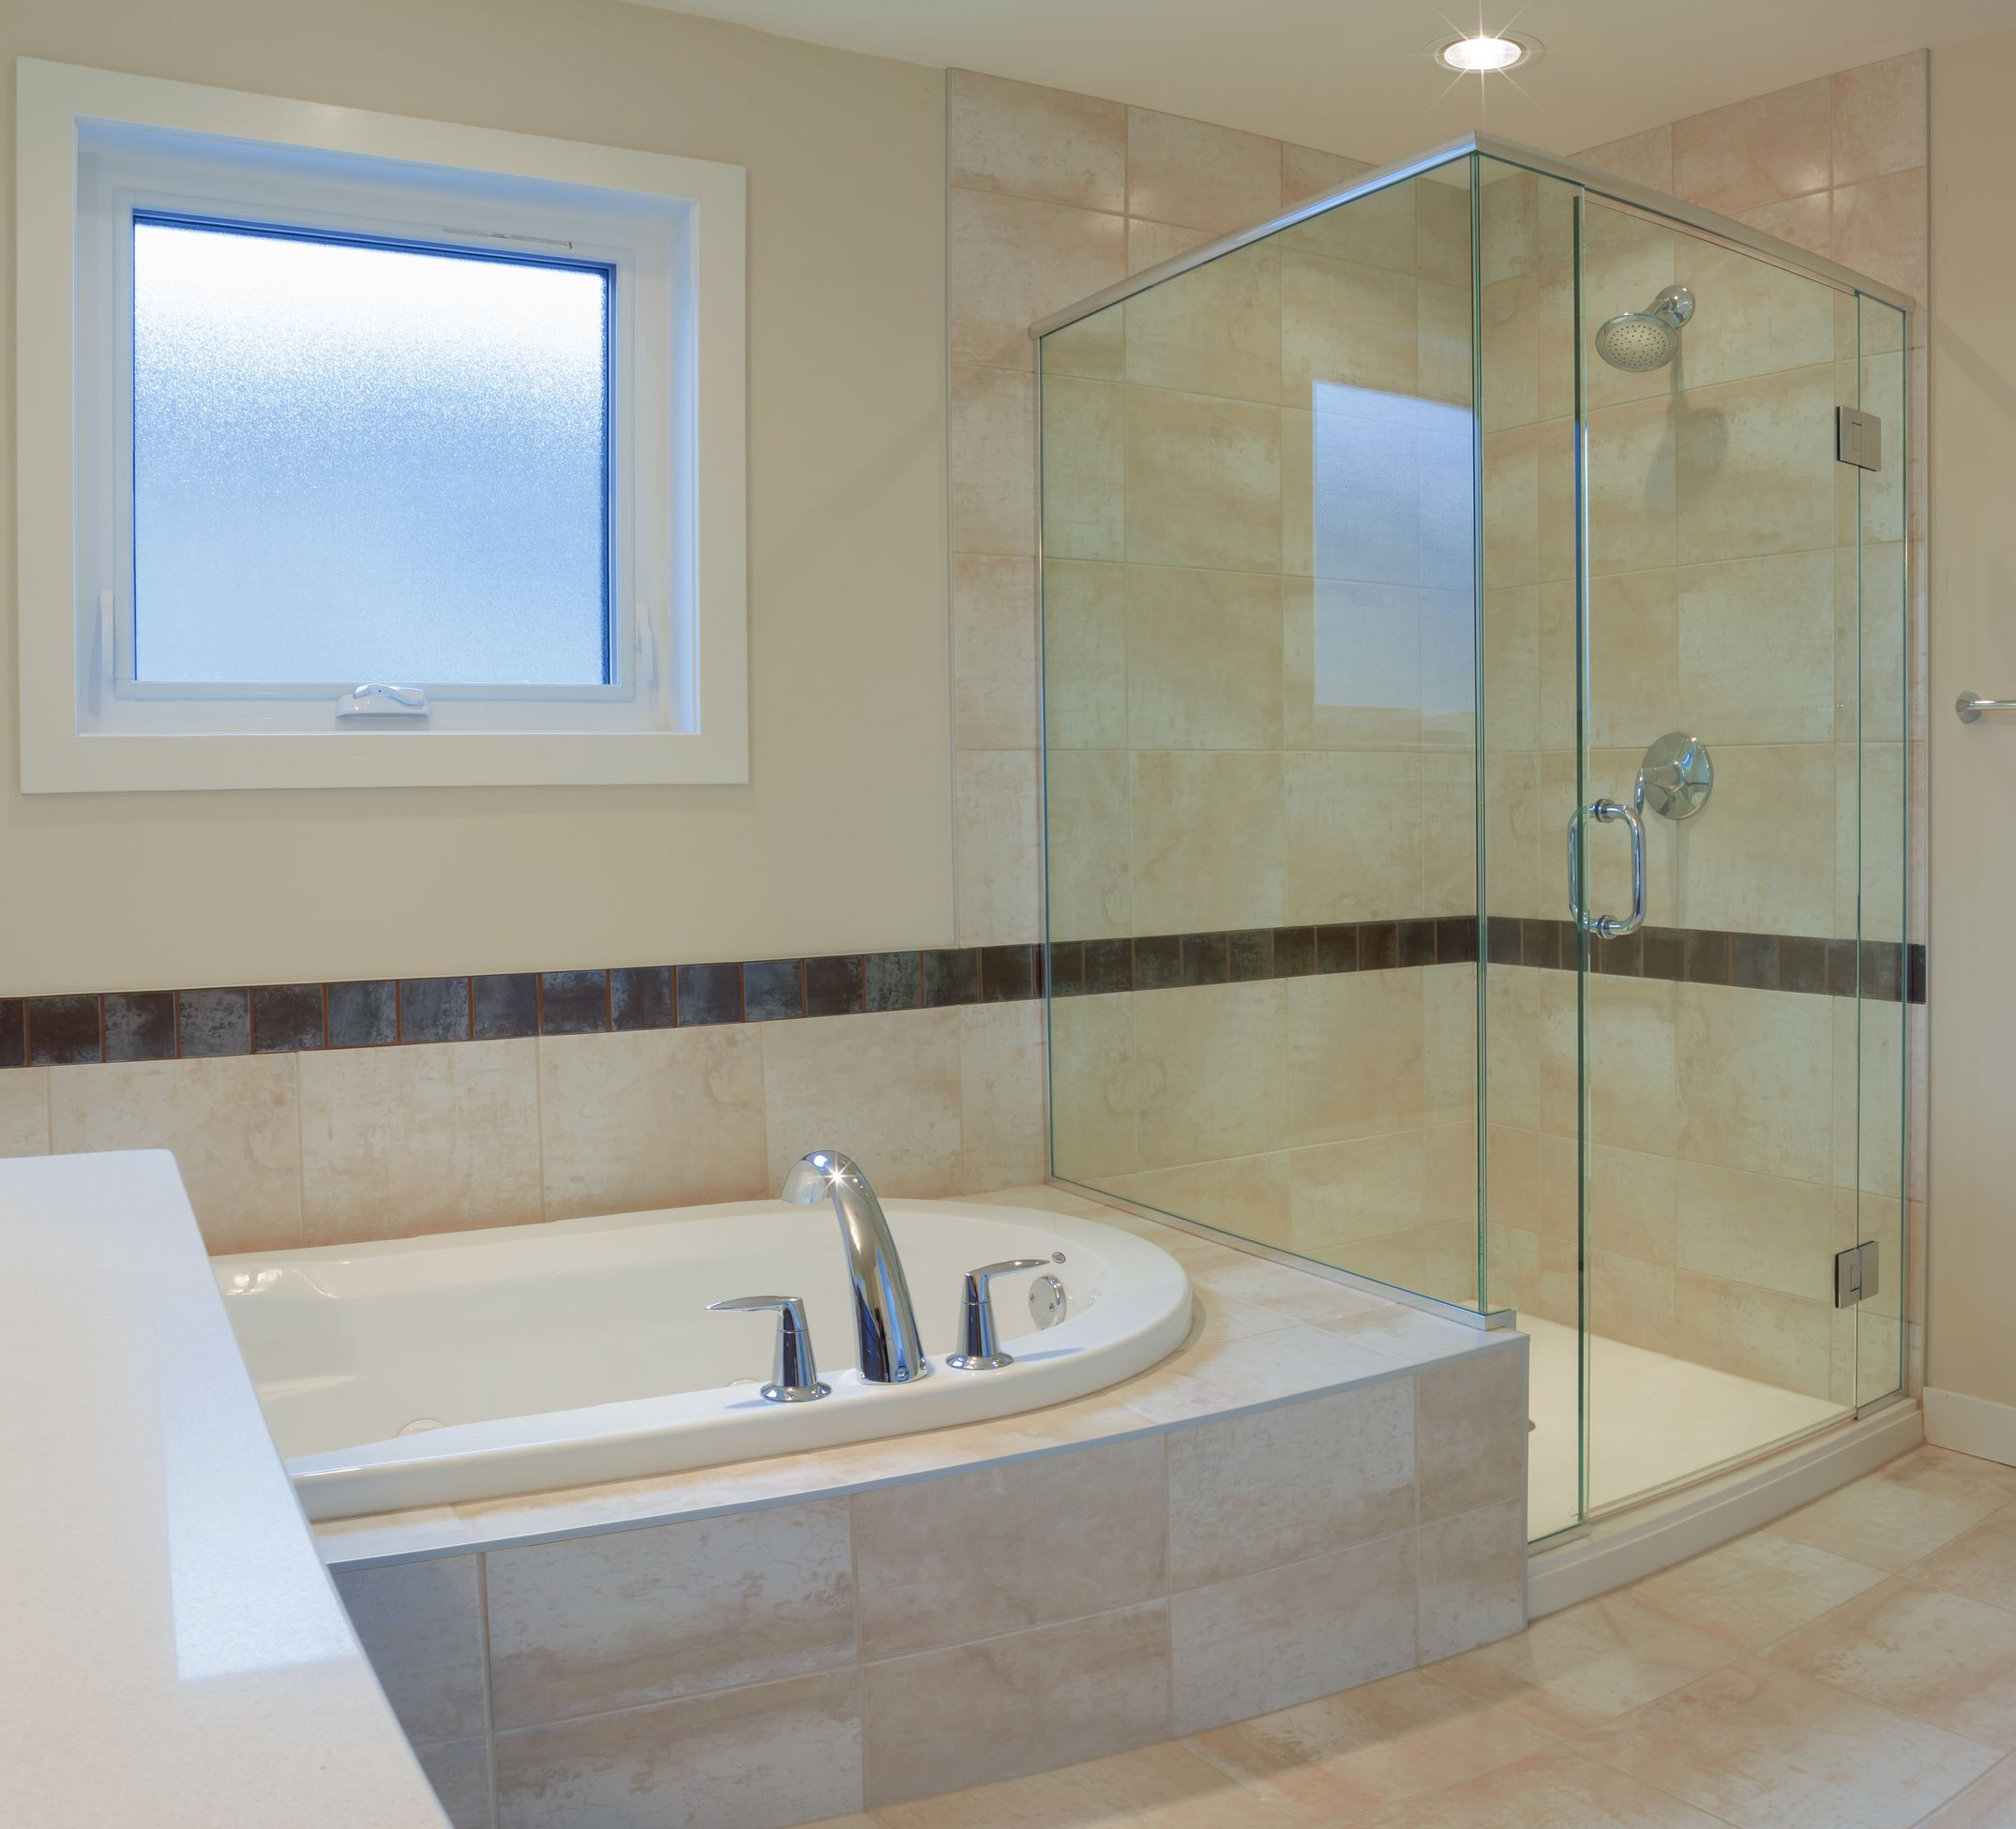 Benefits of Getting Professional Bathroom Renovations